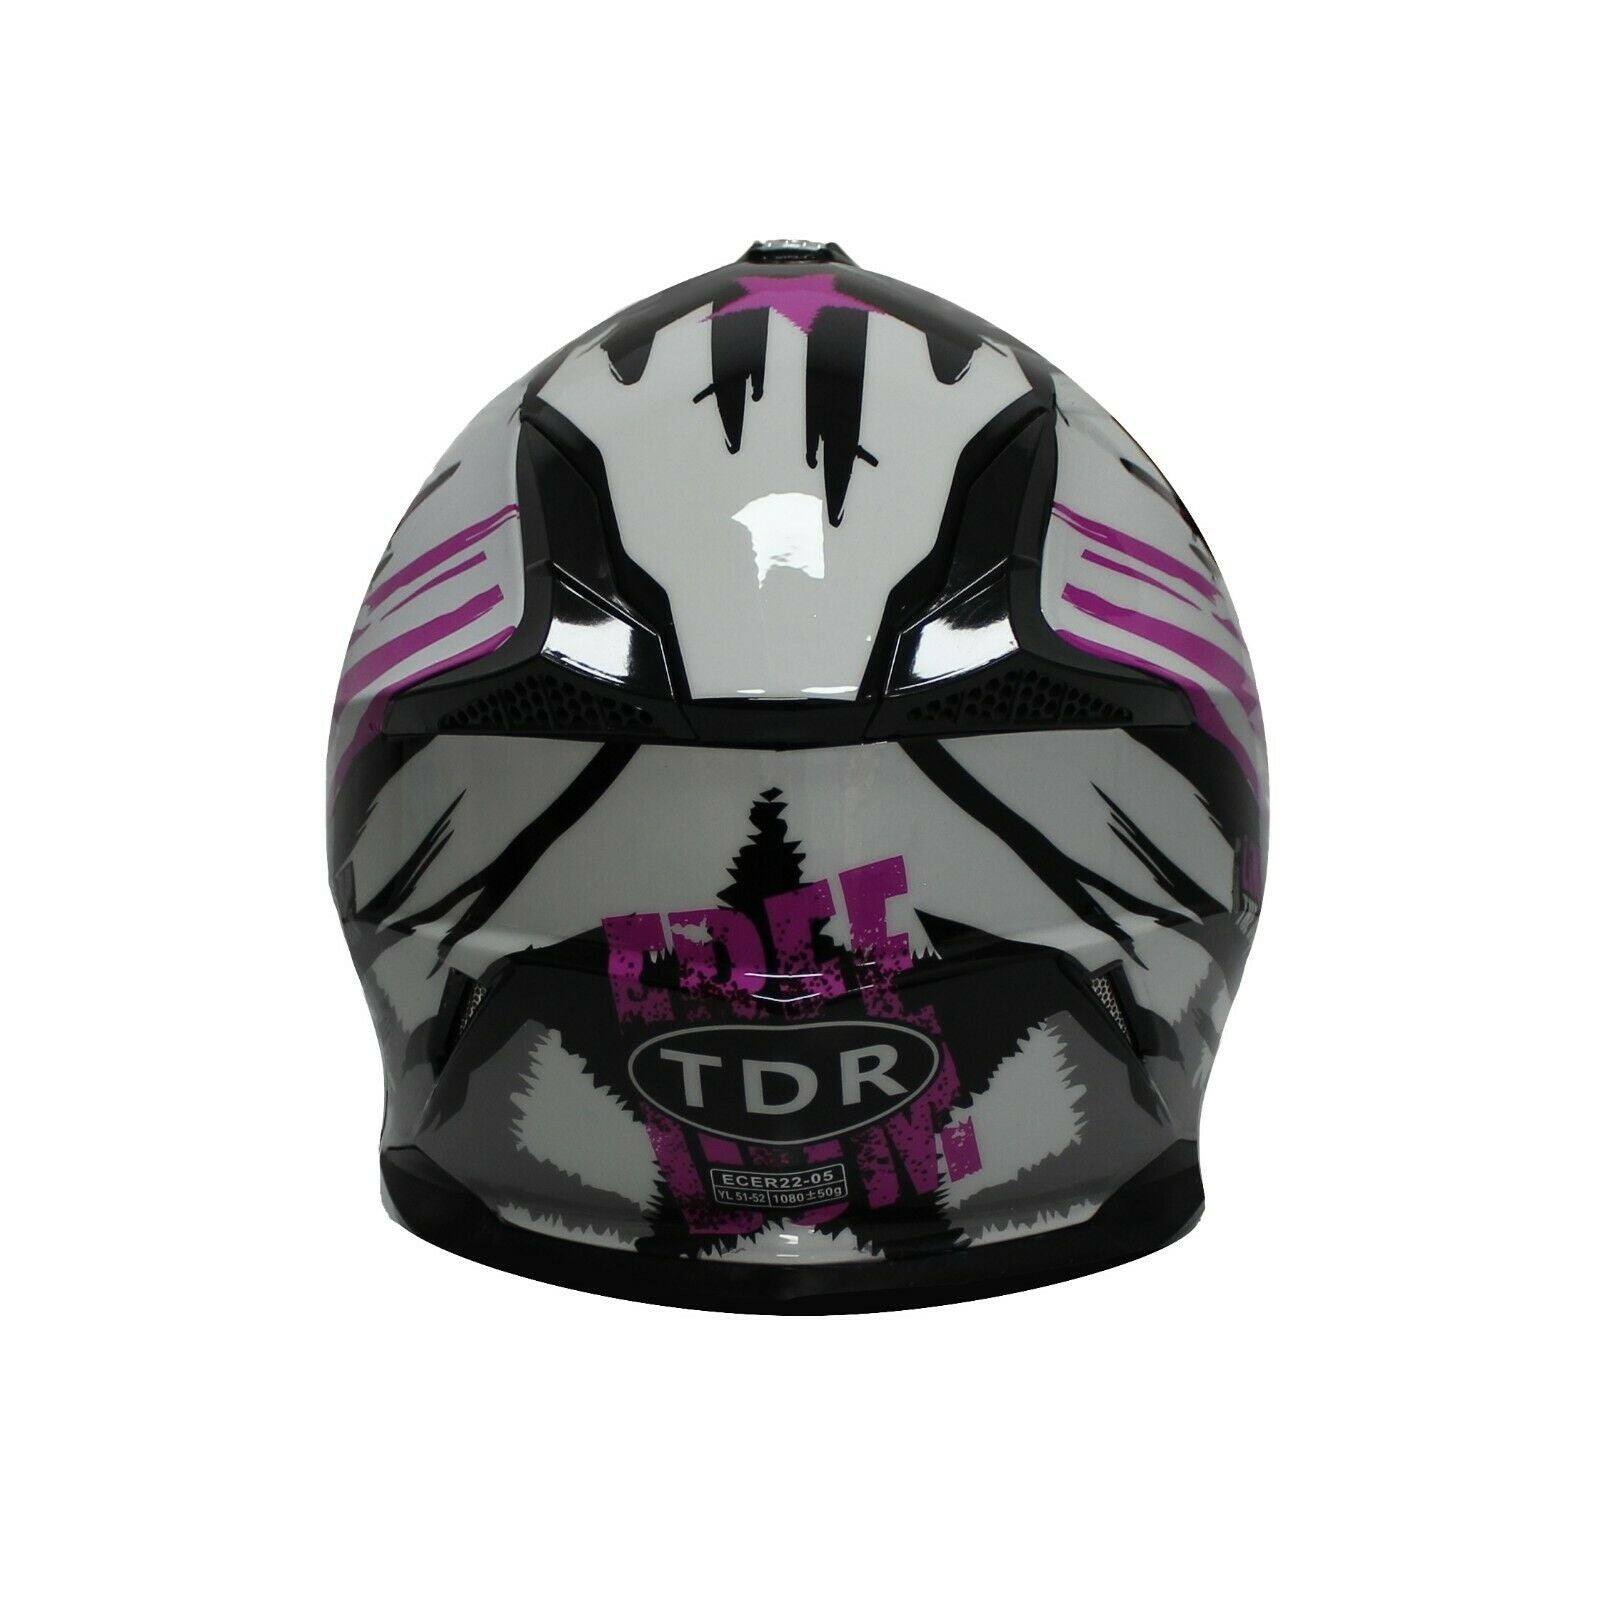 Pink Motorcycle Helmet for Kids/Youth/Boy/Girl/Children - TDRMOTO